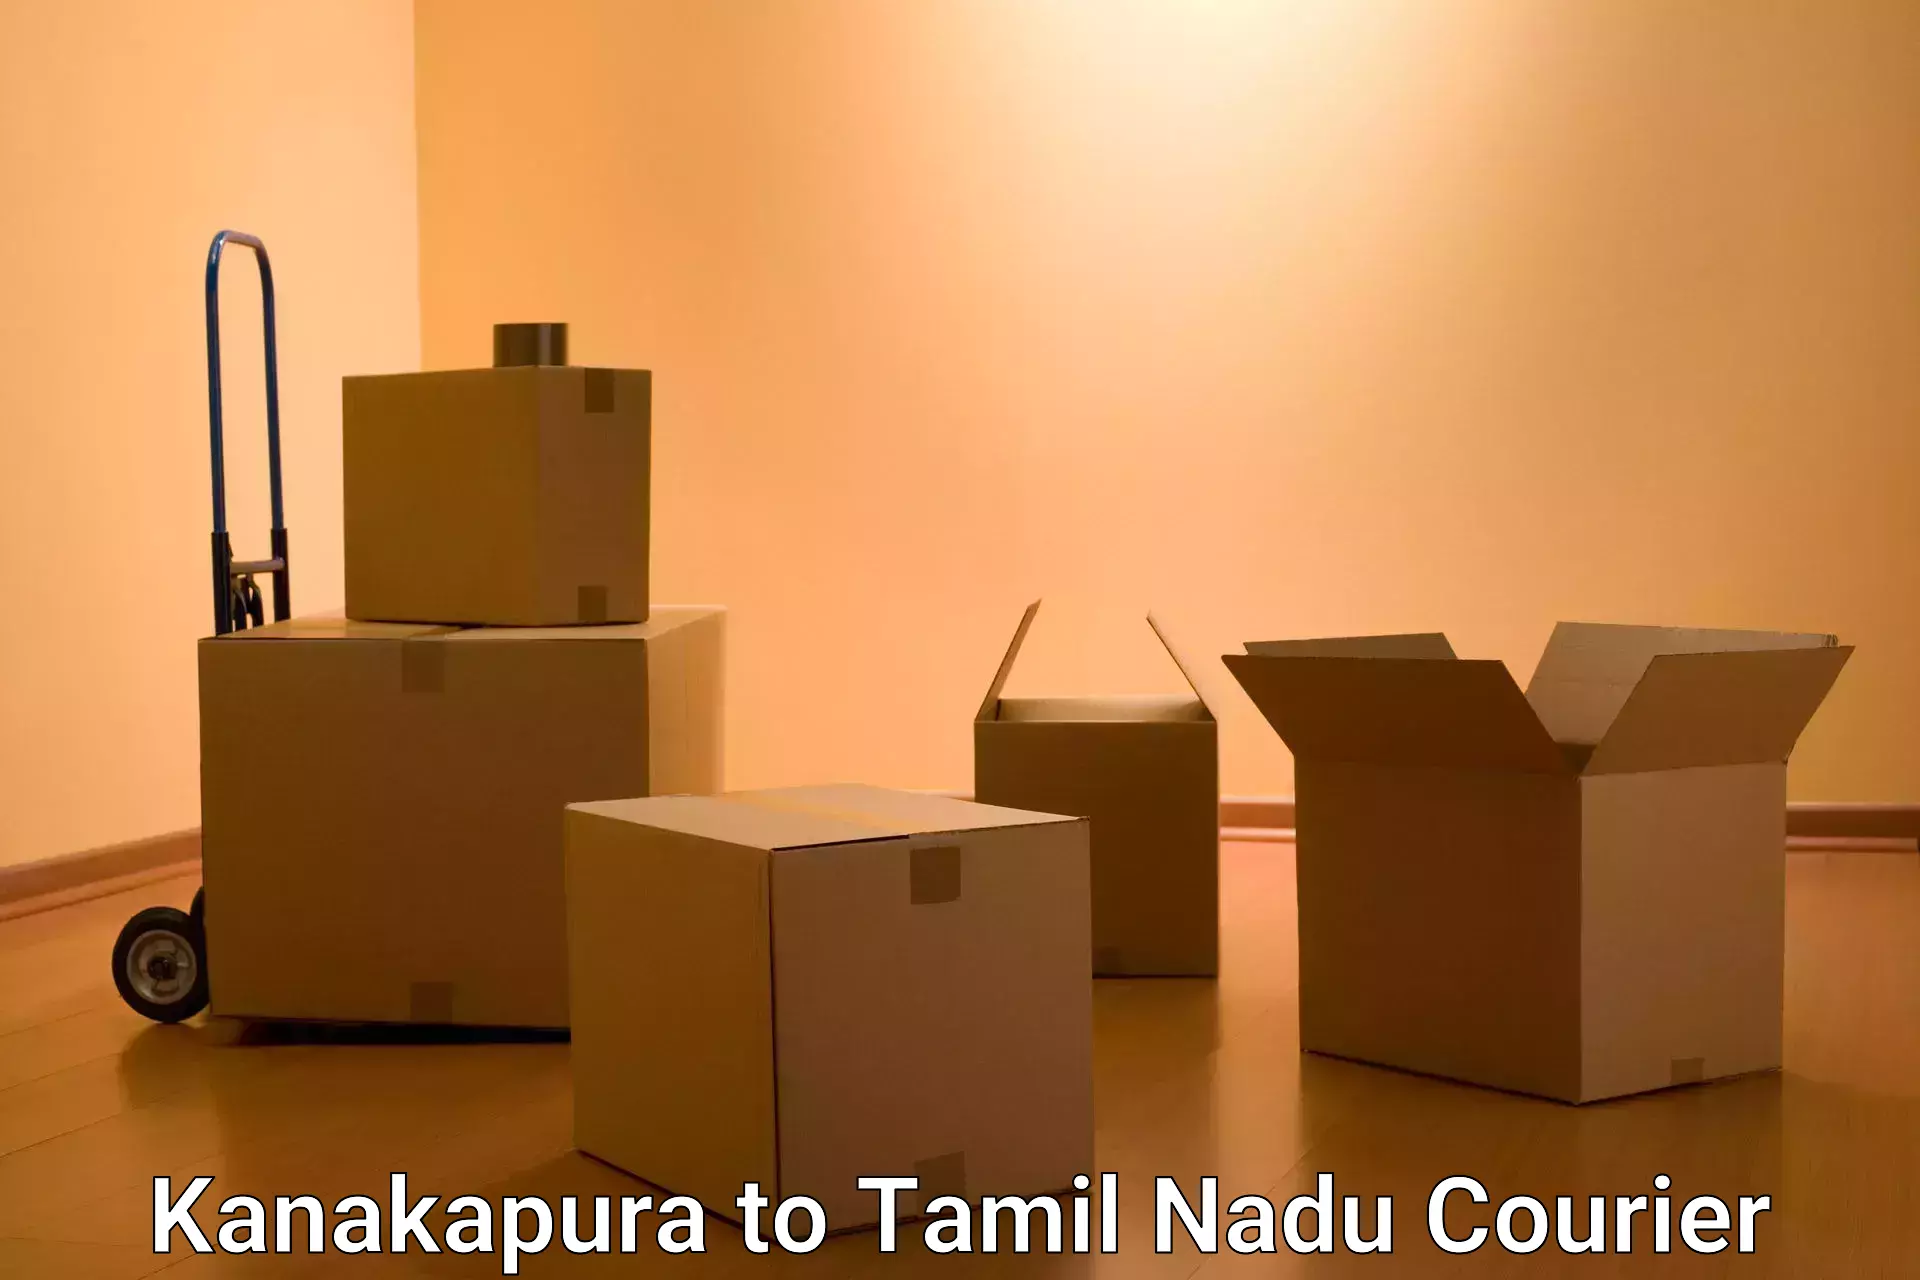 Digital courier platforms Kanakapura to Marakkanam